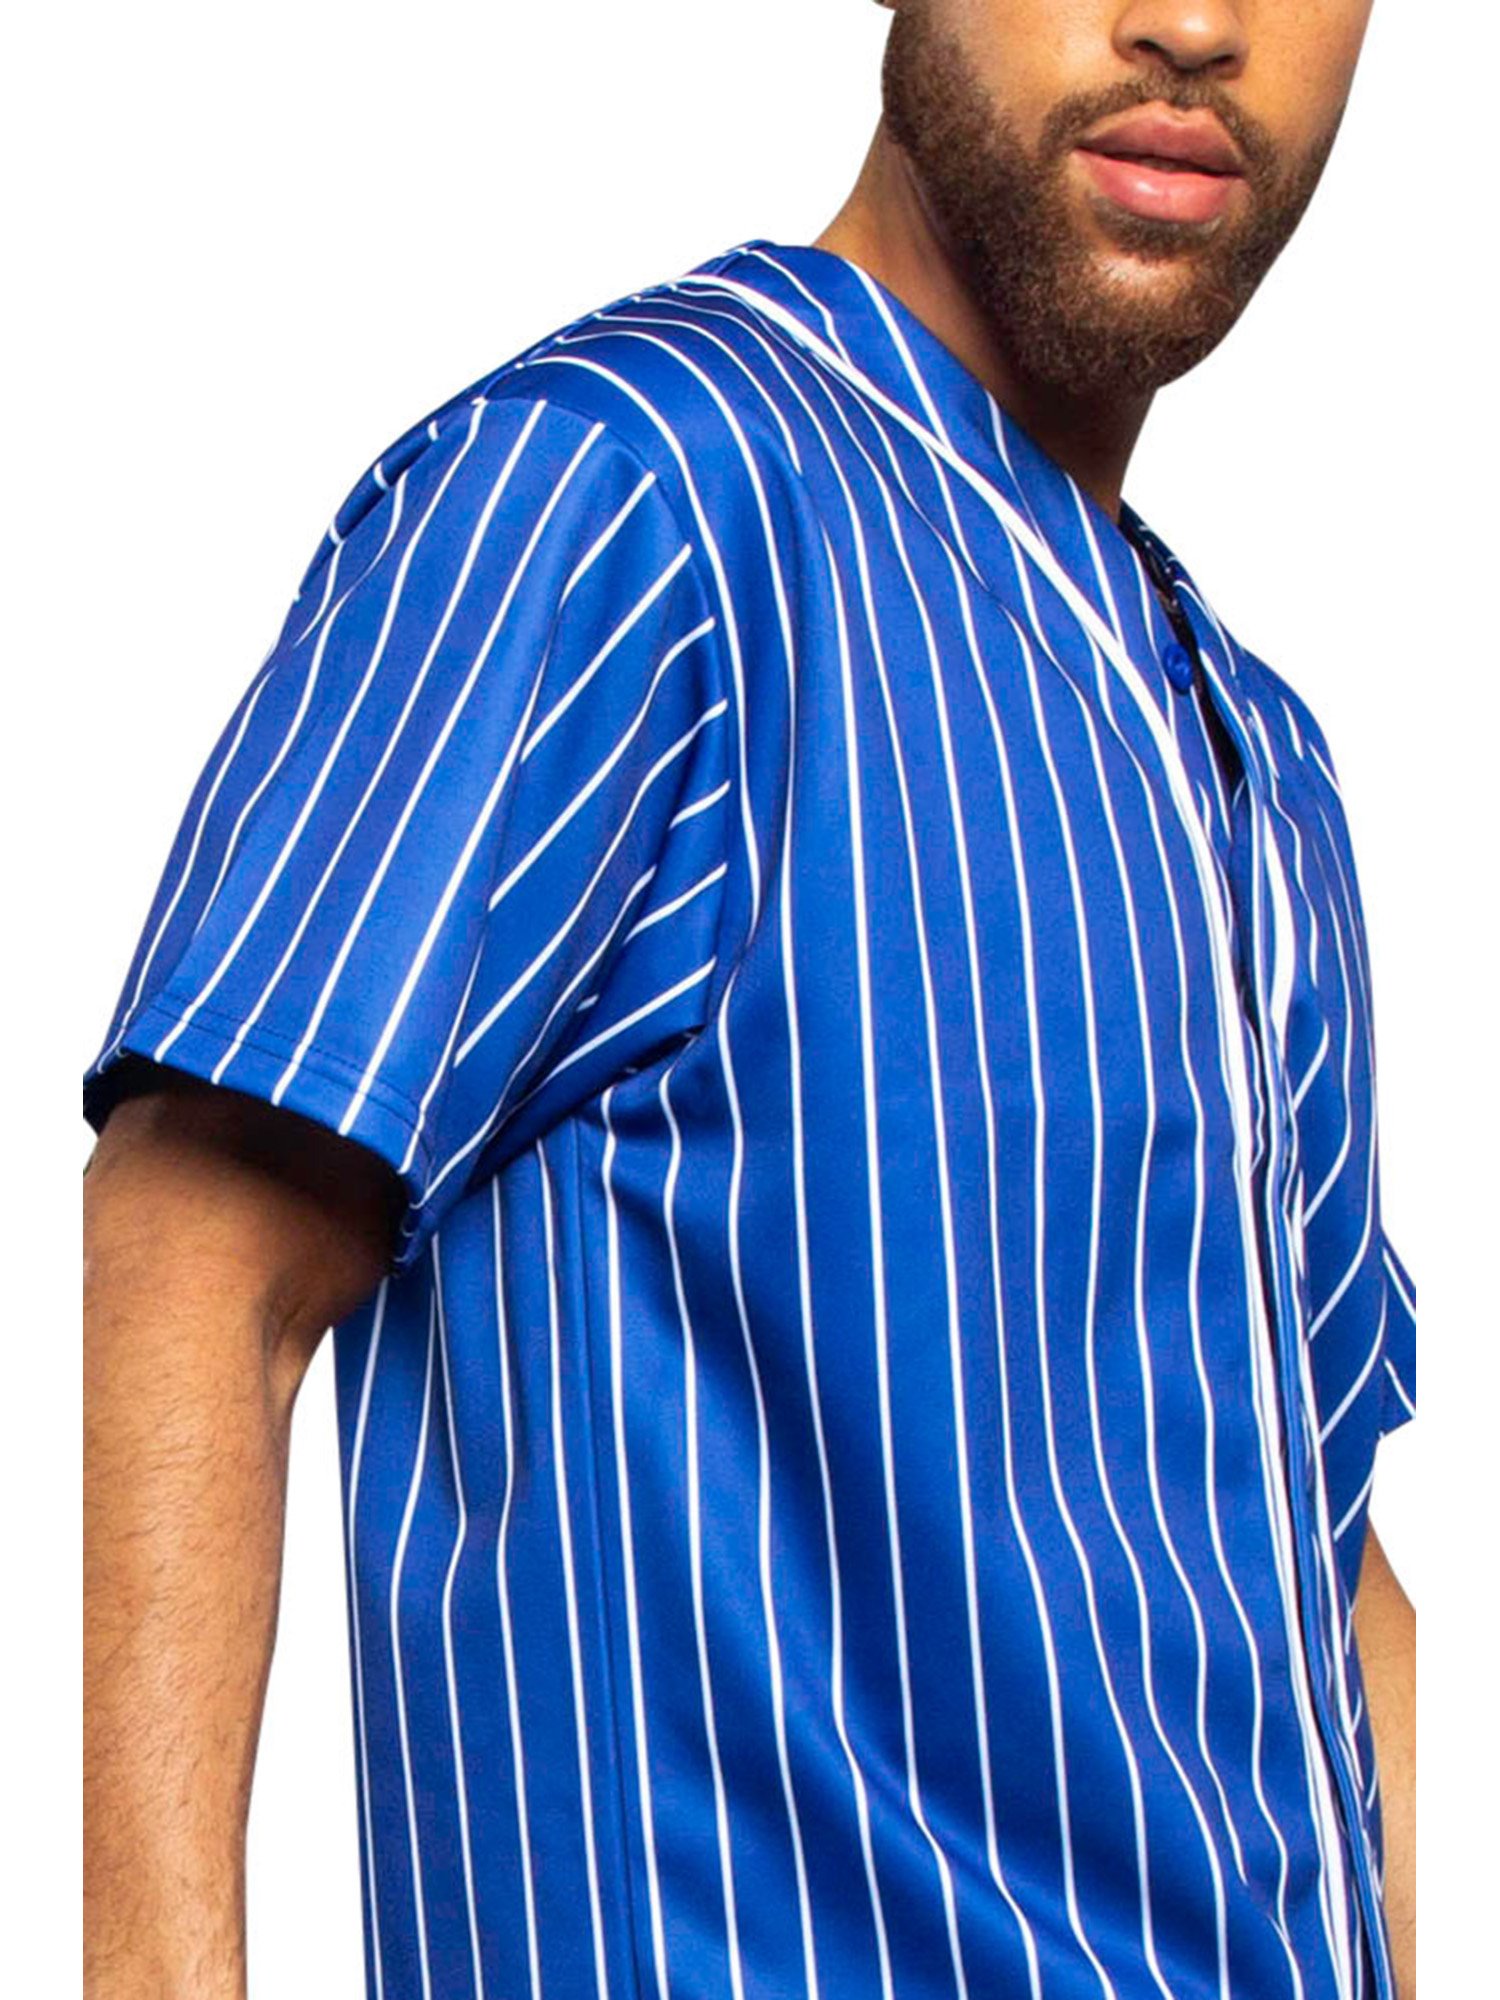 Men's Movie Baseball Jersey Victory Lap Stitched Button Down Shirt Blue 4XL  